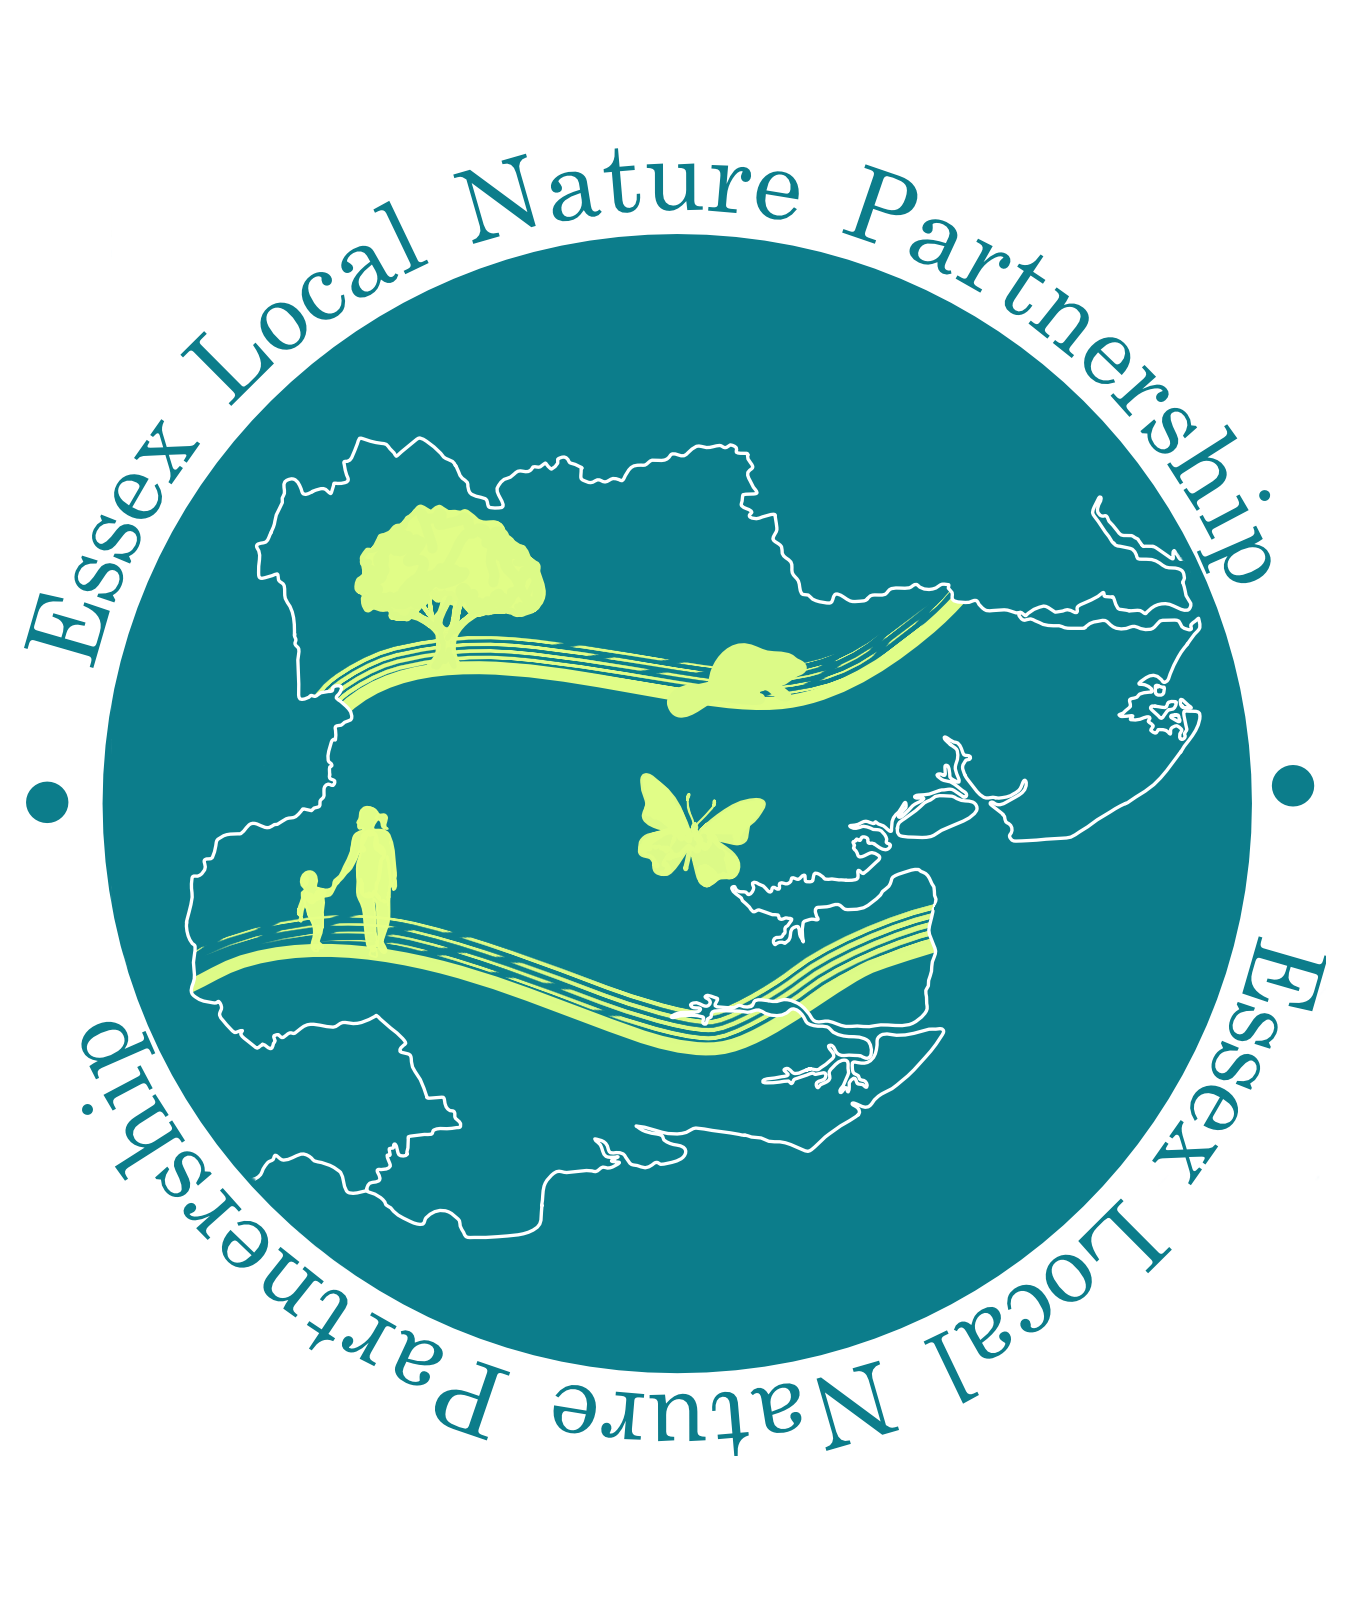 The Essex Local Nature Partnership